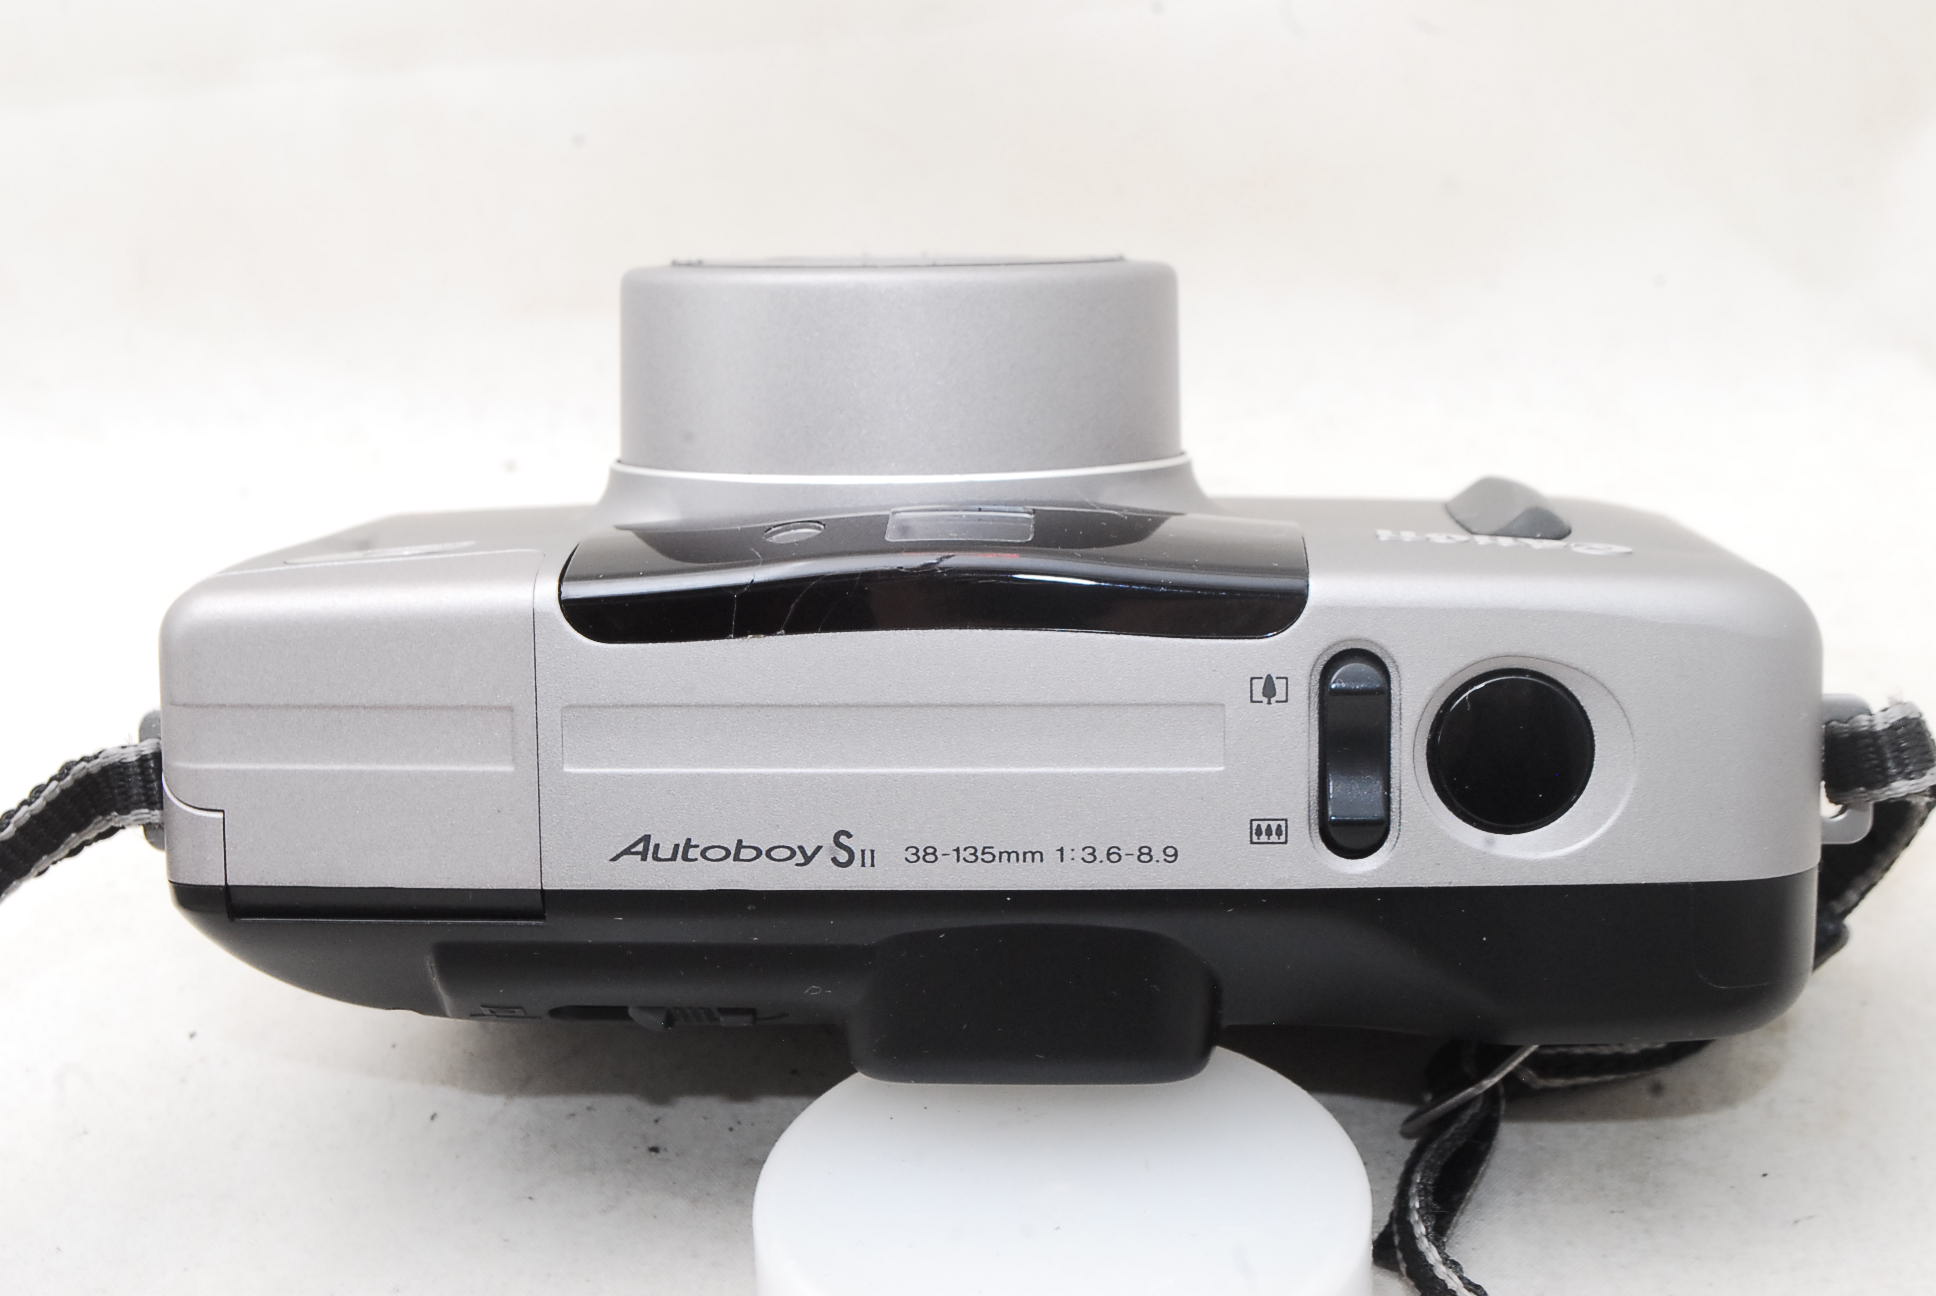 Canon Autoboy S II PANORAMA Point & Shoot Film Camera #7411